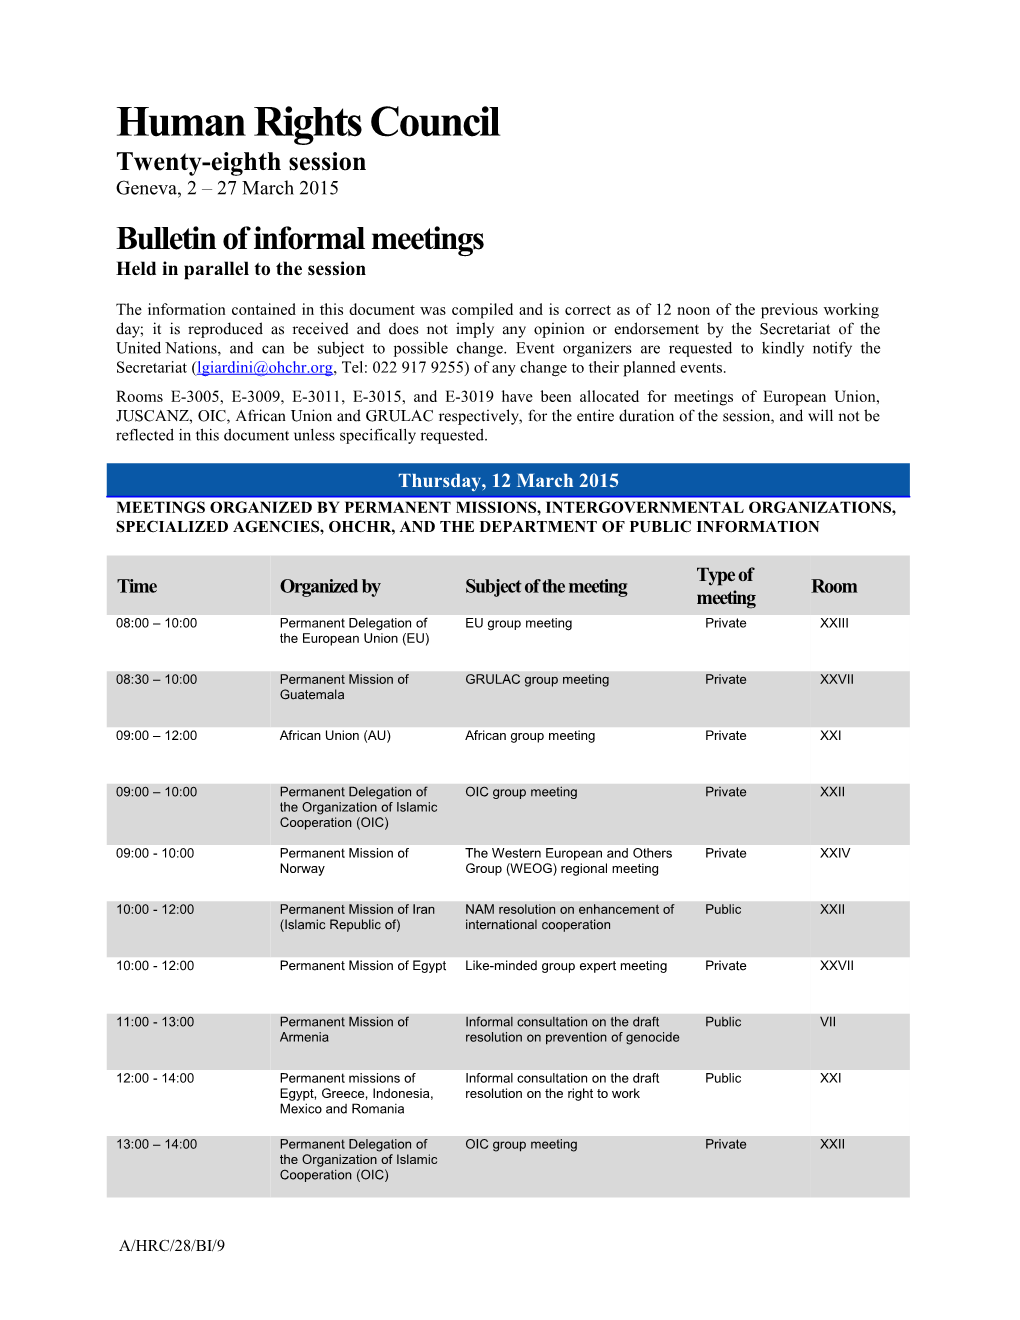 Bulletin of Informal Meetings, Thursday 12 March 2015